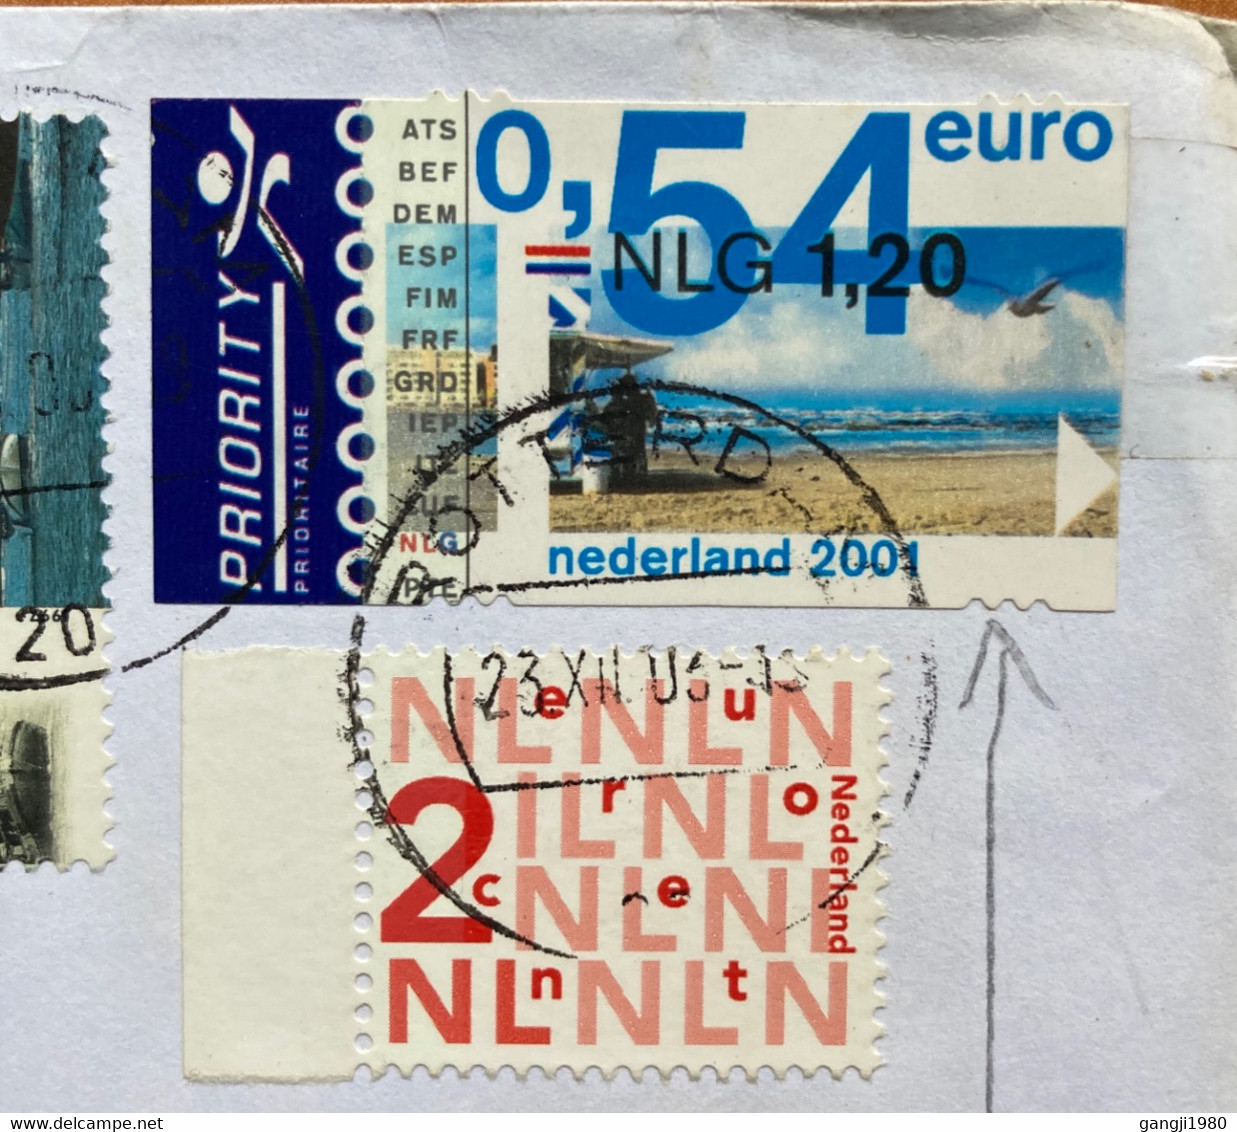 NEDERLAND 2004, PRIORITY SELF-ADHESIVE ATM STAMP ,5 VIEW OF SEA & CITY SHIP COVER TO LITHUANIA - Briefe U. Dokumente